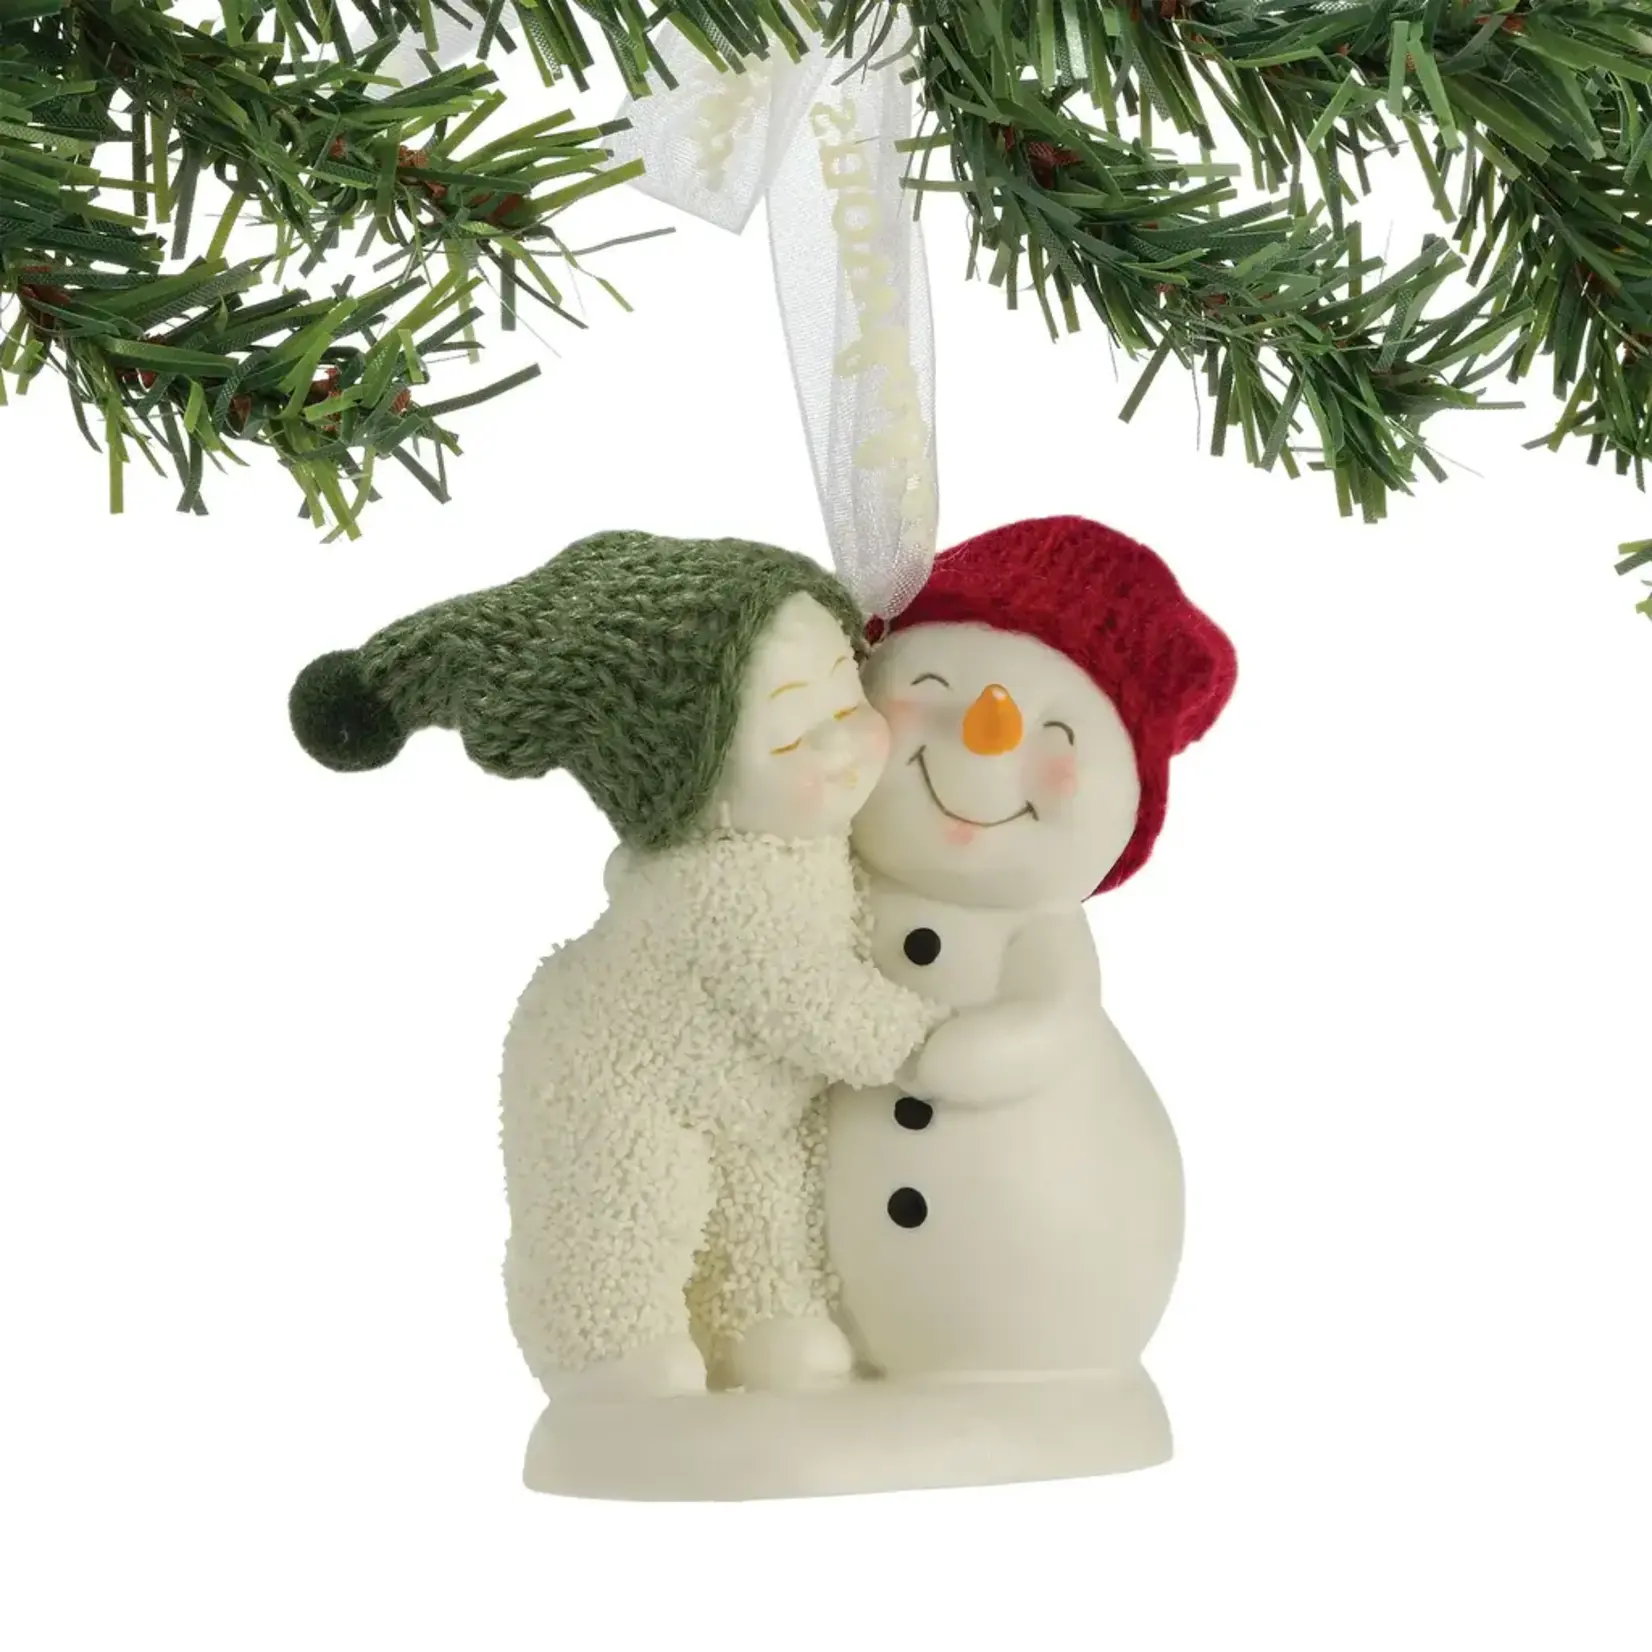 Department 56 Ornament Snowbabies - Hug Me!